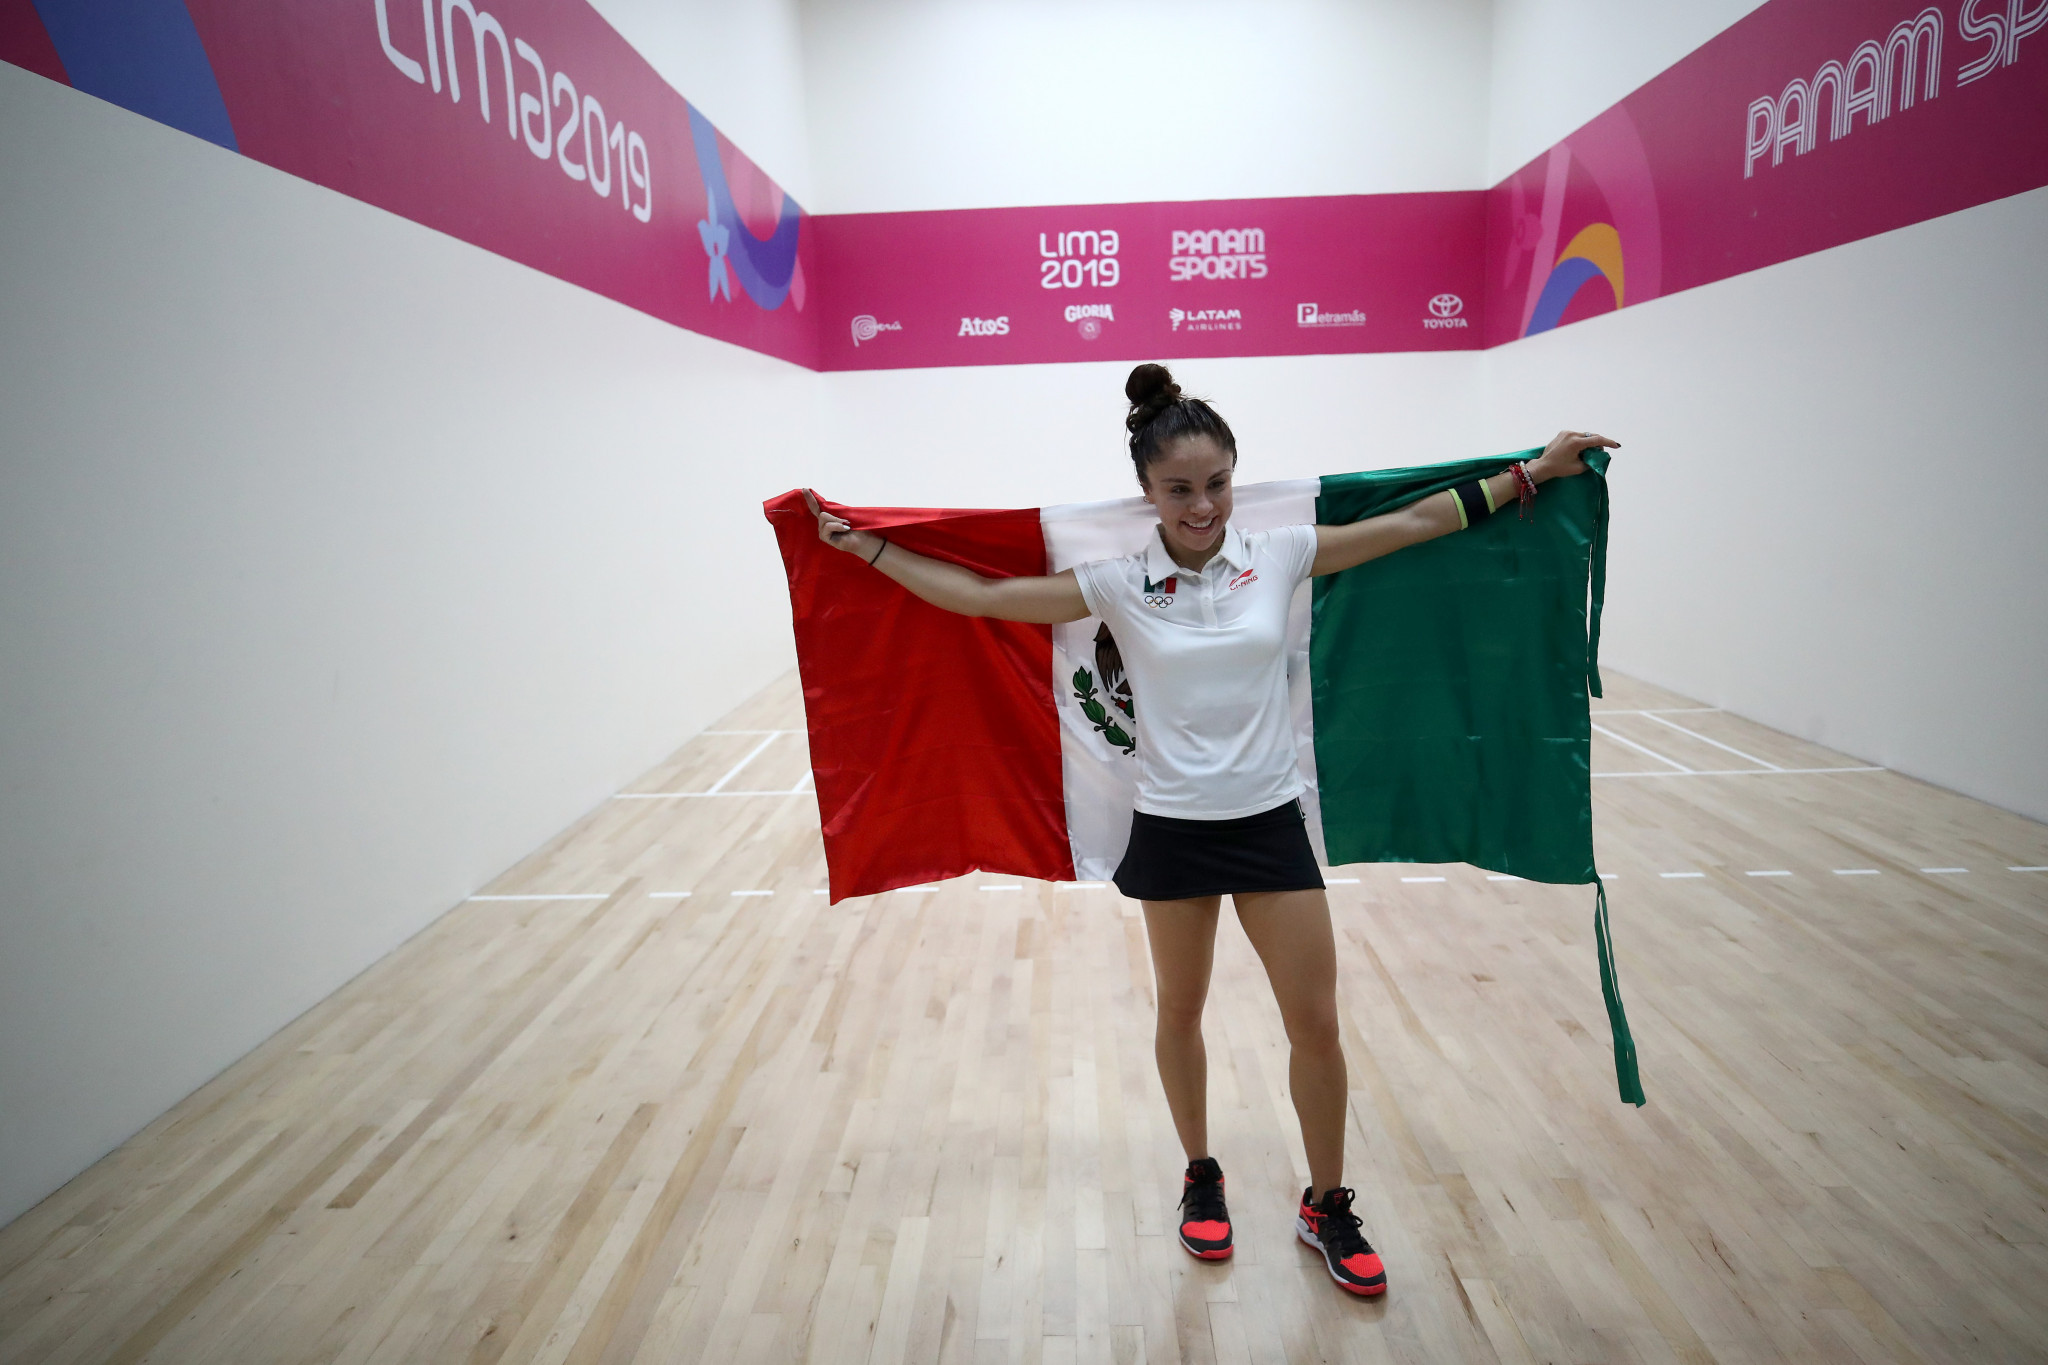 Mexican racquetball star Longoria earns third consecutive Pan American Games singles title